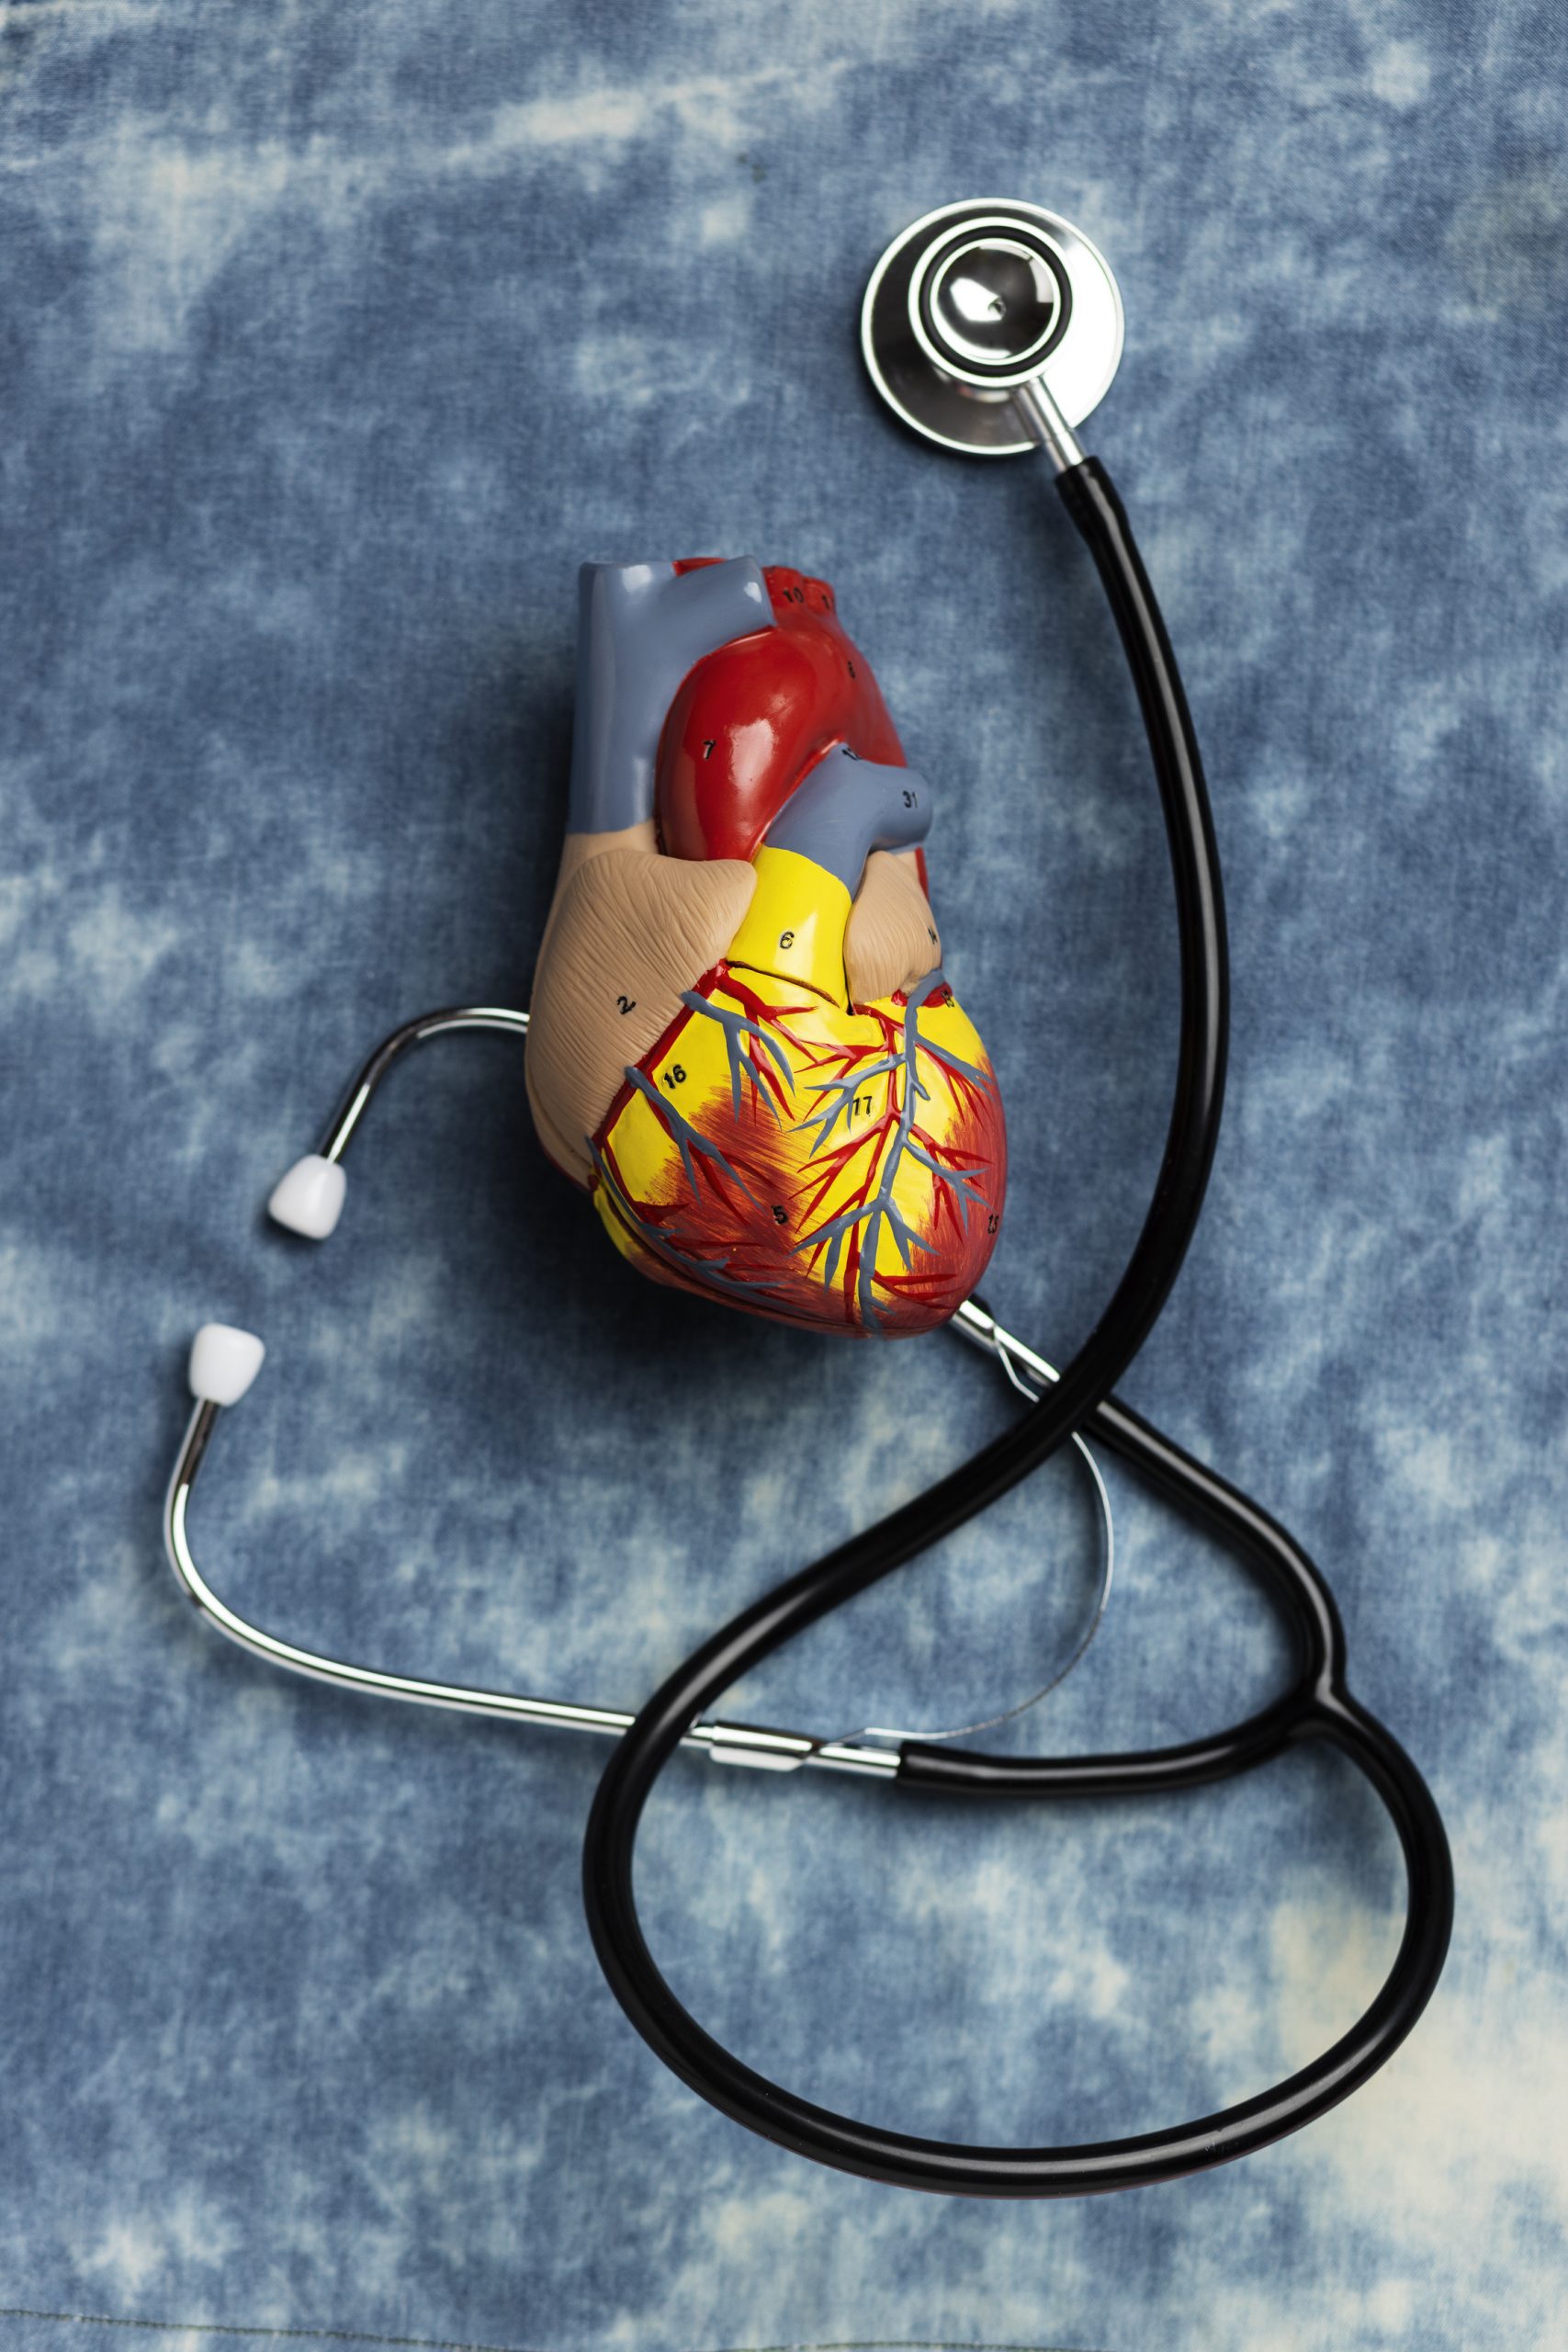 congenital heart abnormalities